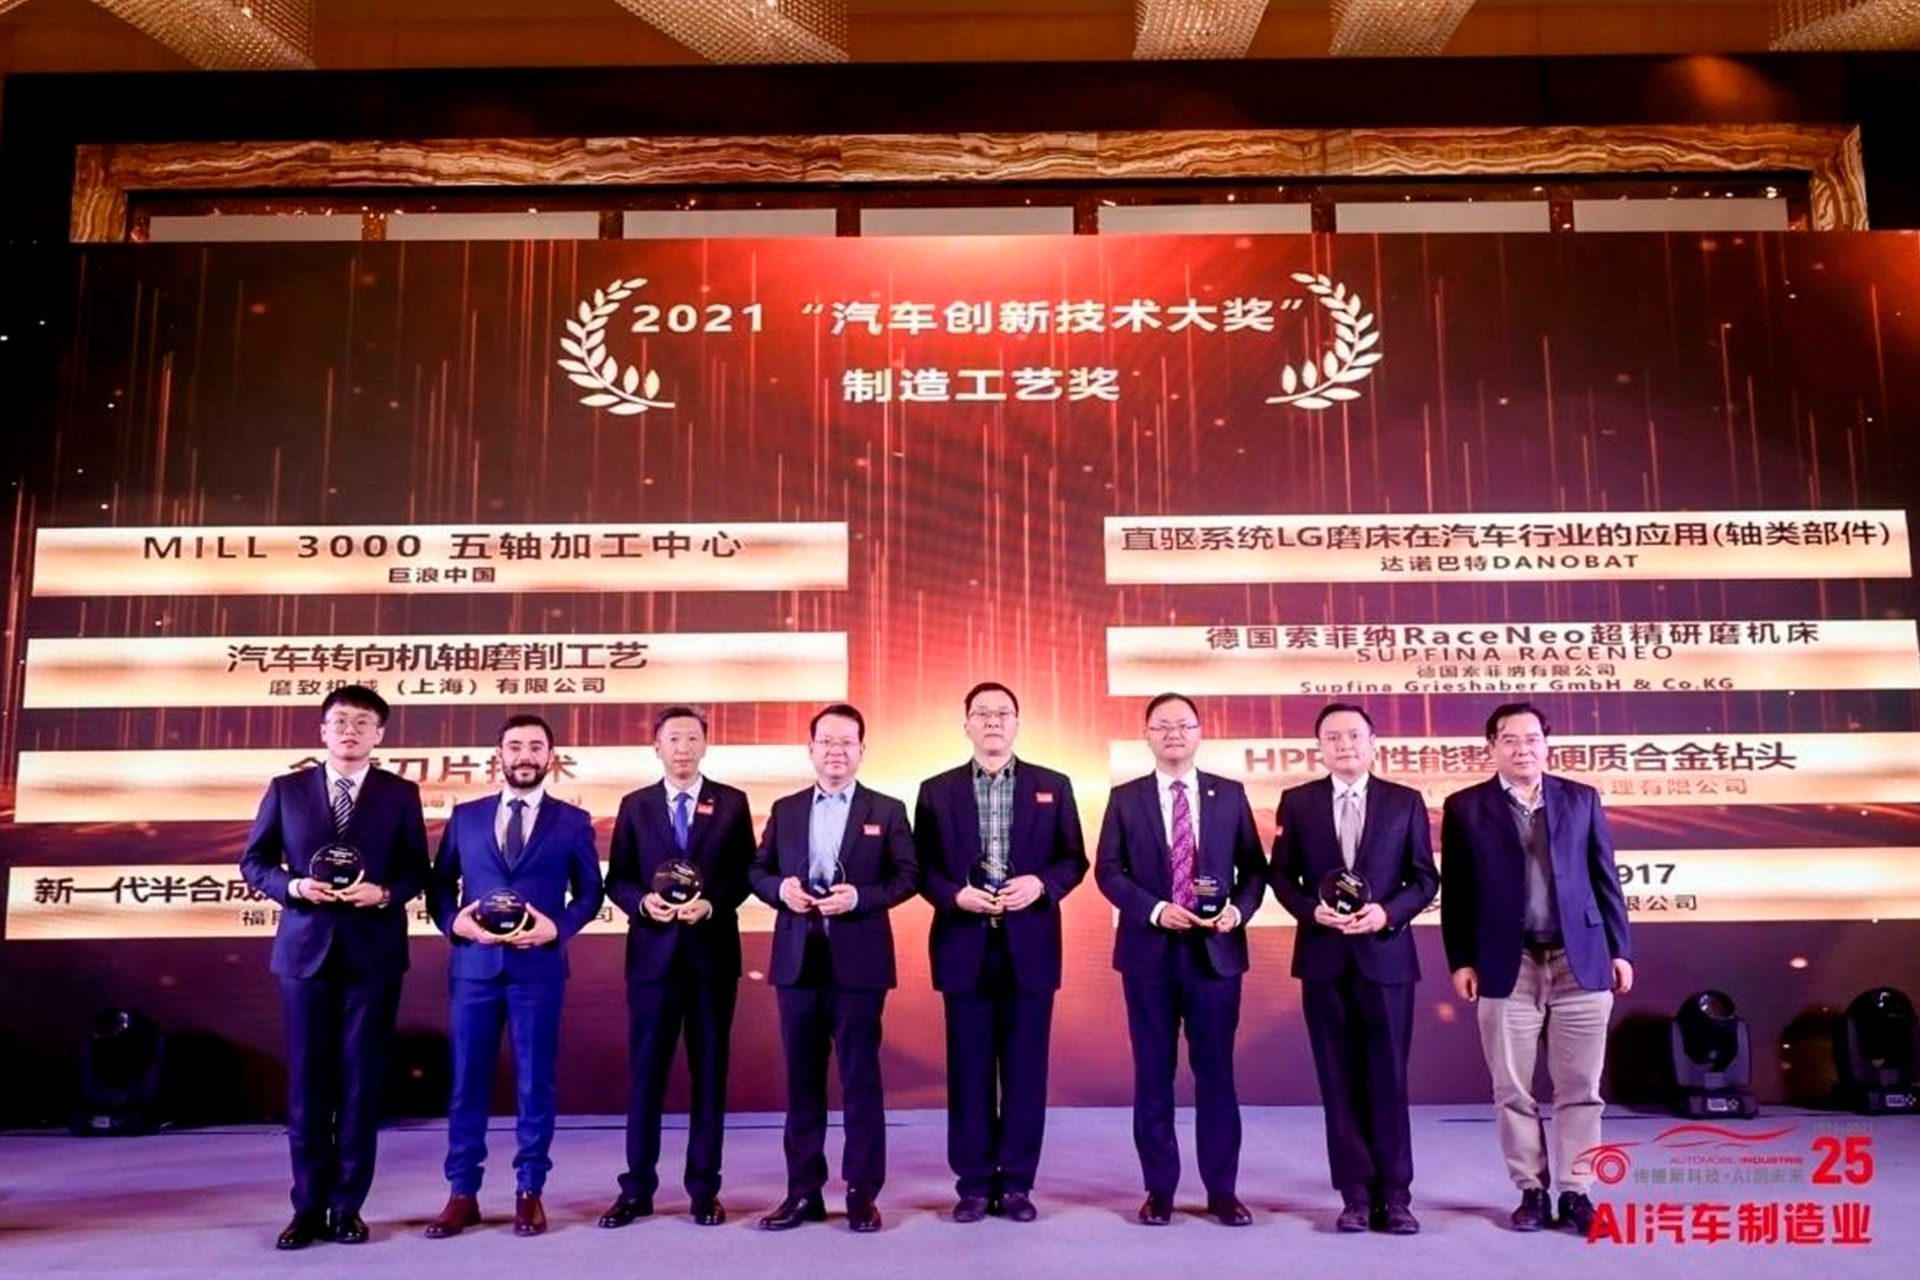 Premio “Manufacturing Innovation Technology Award”